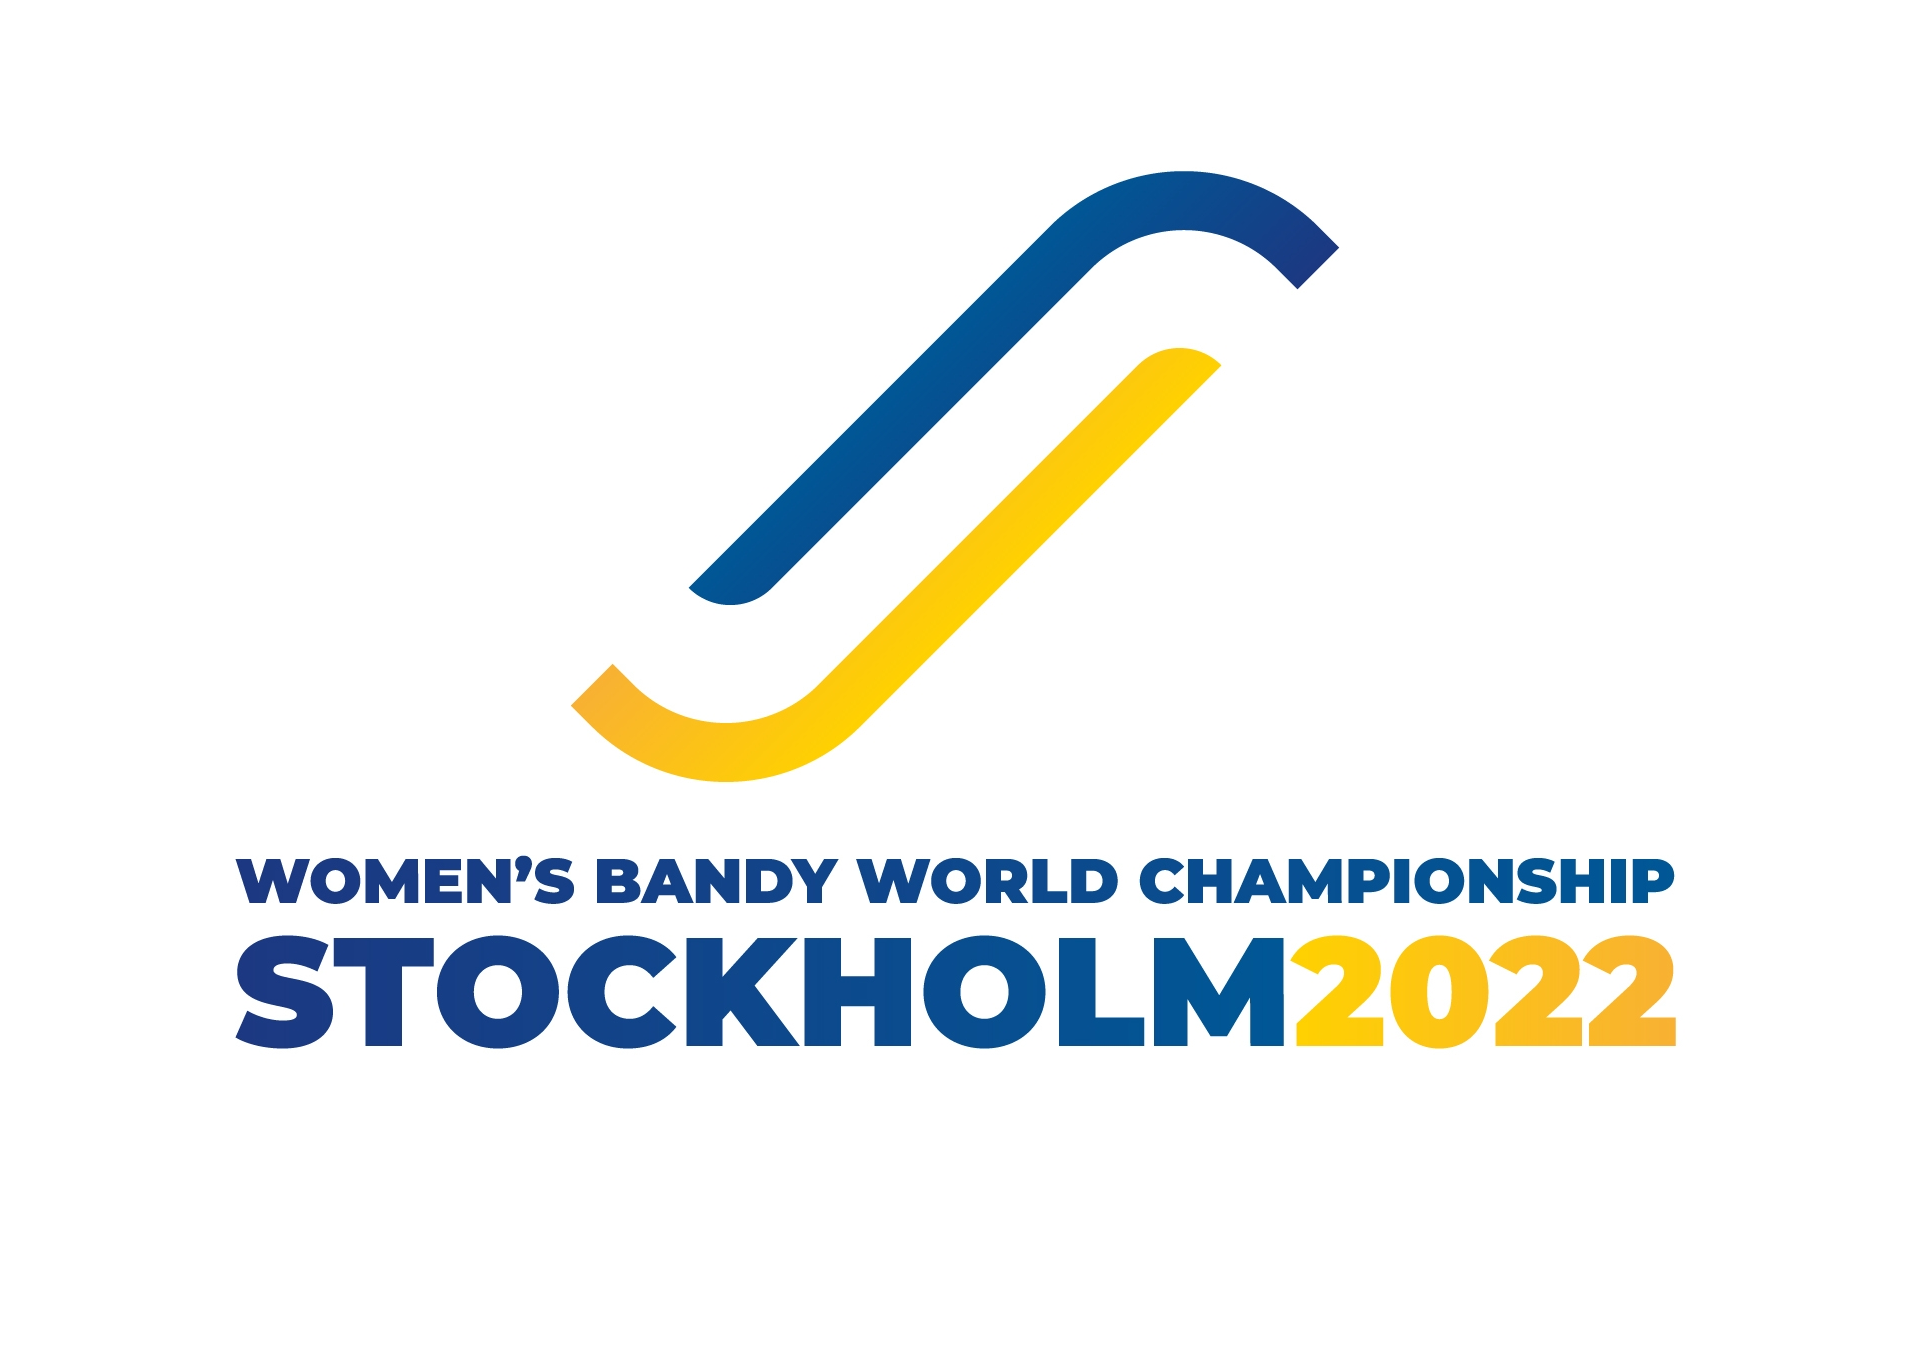 Stockholm to host 2022 Women’s Bandy World Championship